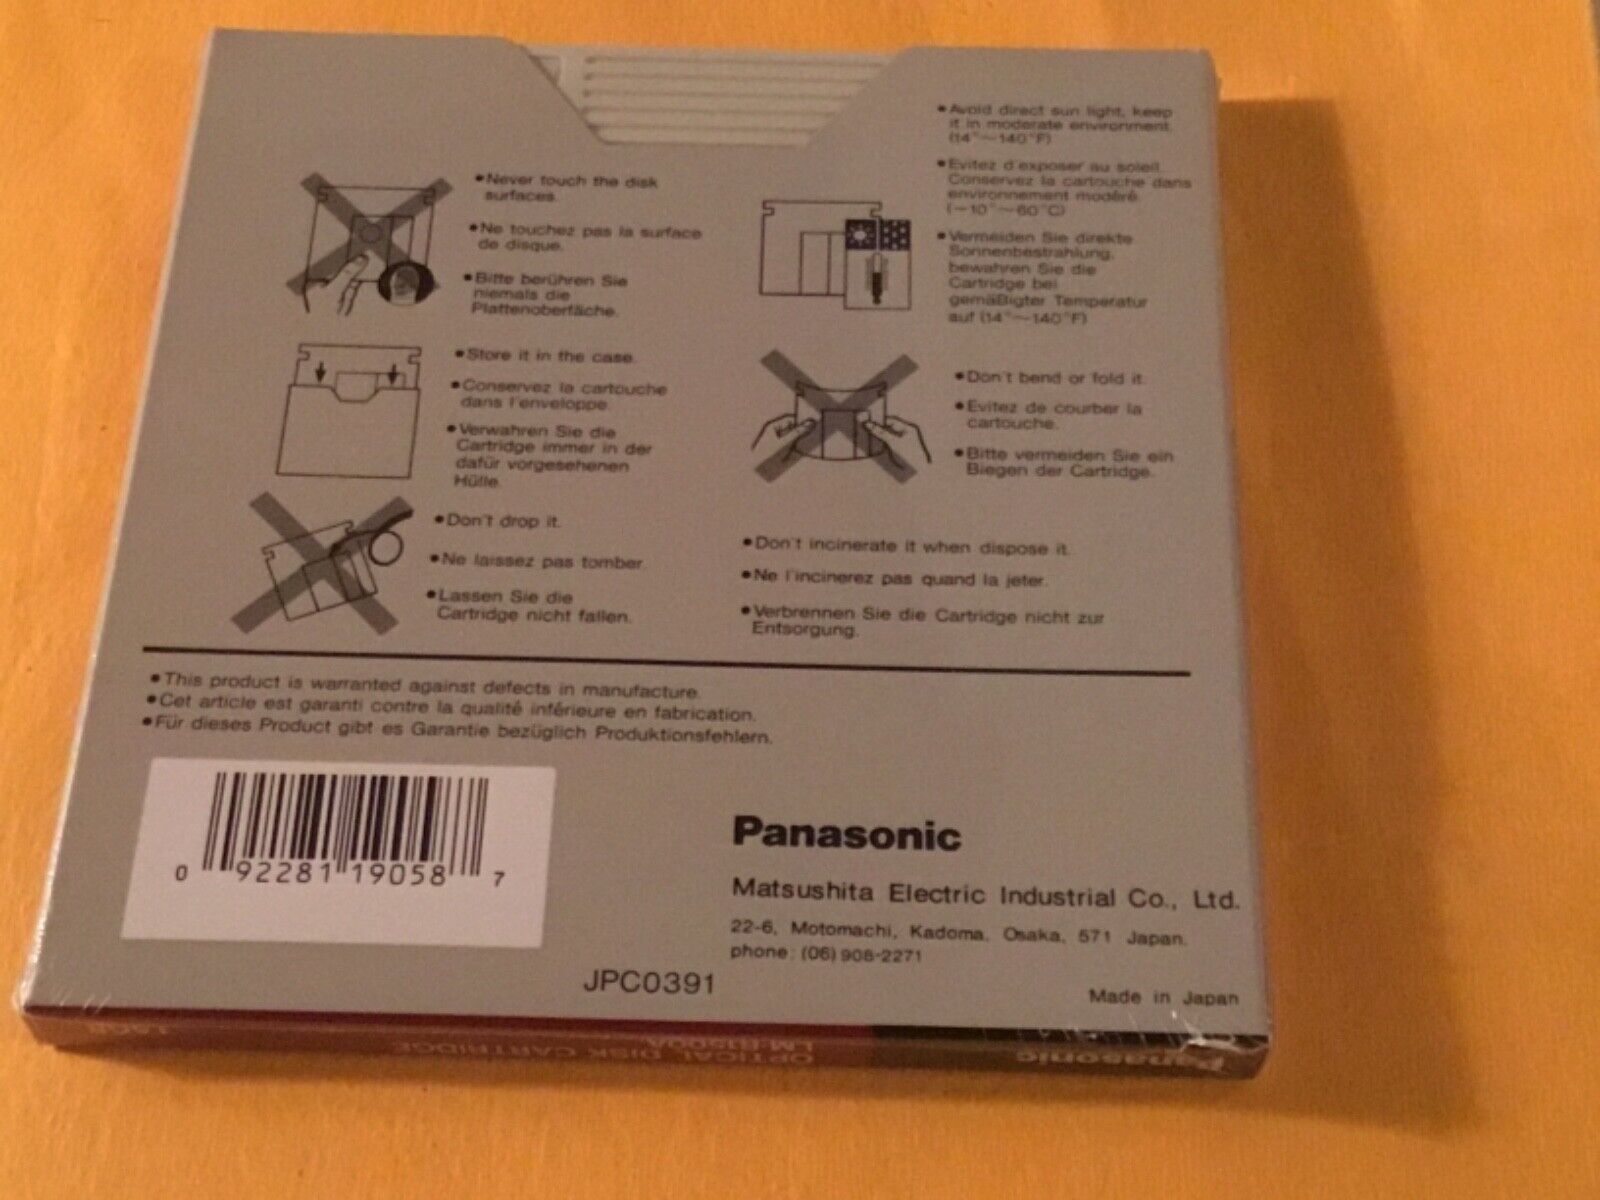 New Lot of 15 Panasonic Magneto Optical Disks LM-R1500A 1.5gb RW Panasonic LM-R1500A - фотография #2